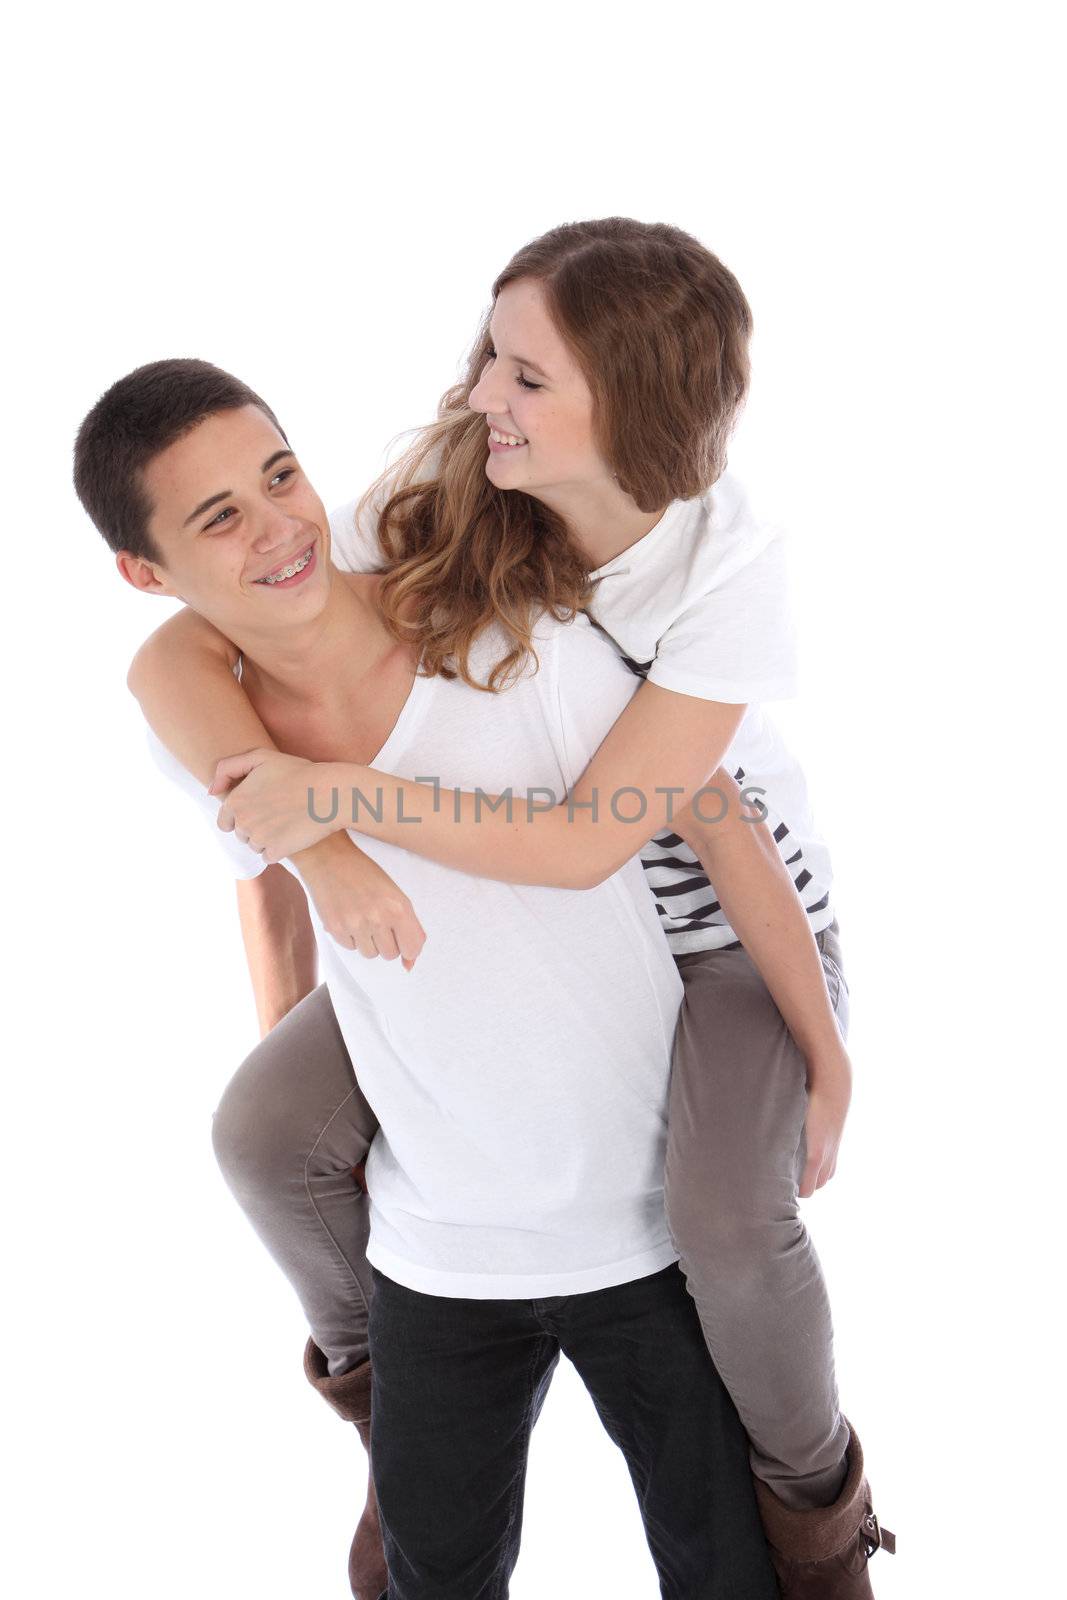 Boy giving his girlfriend a piggyback by Farina6000